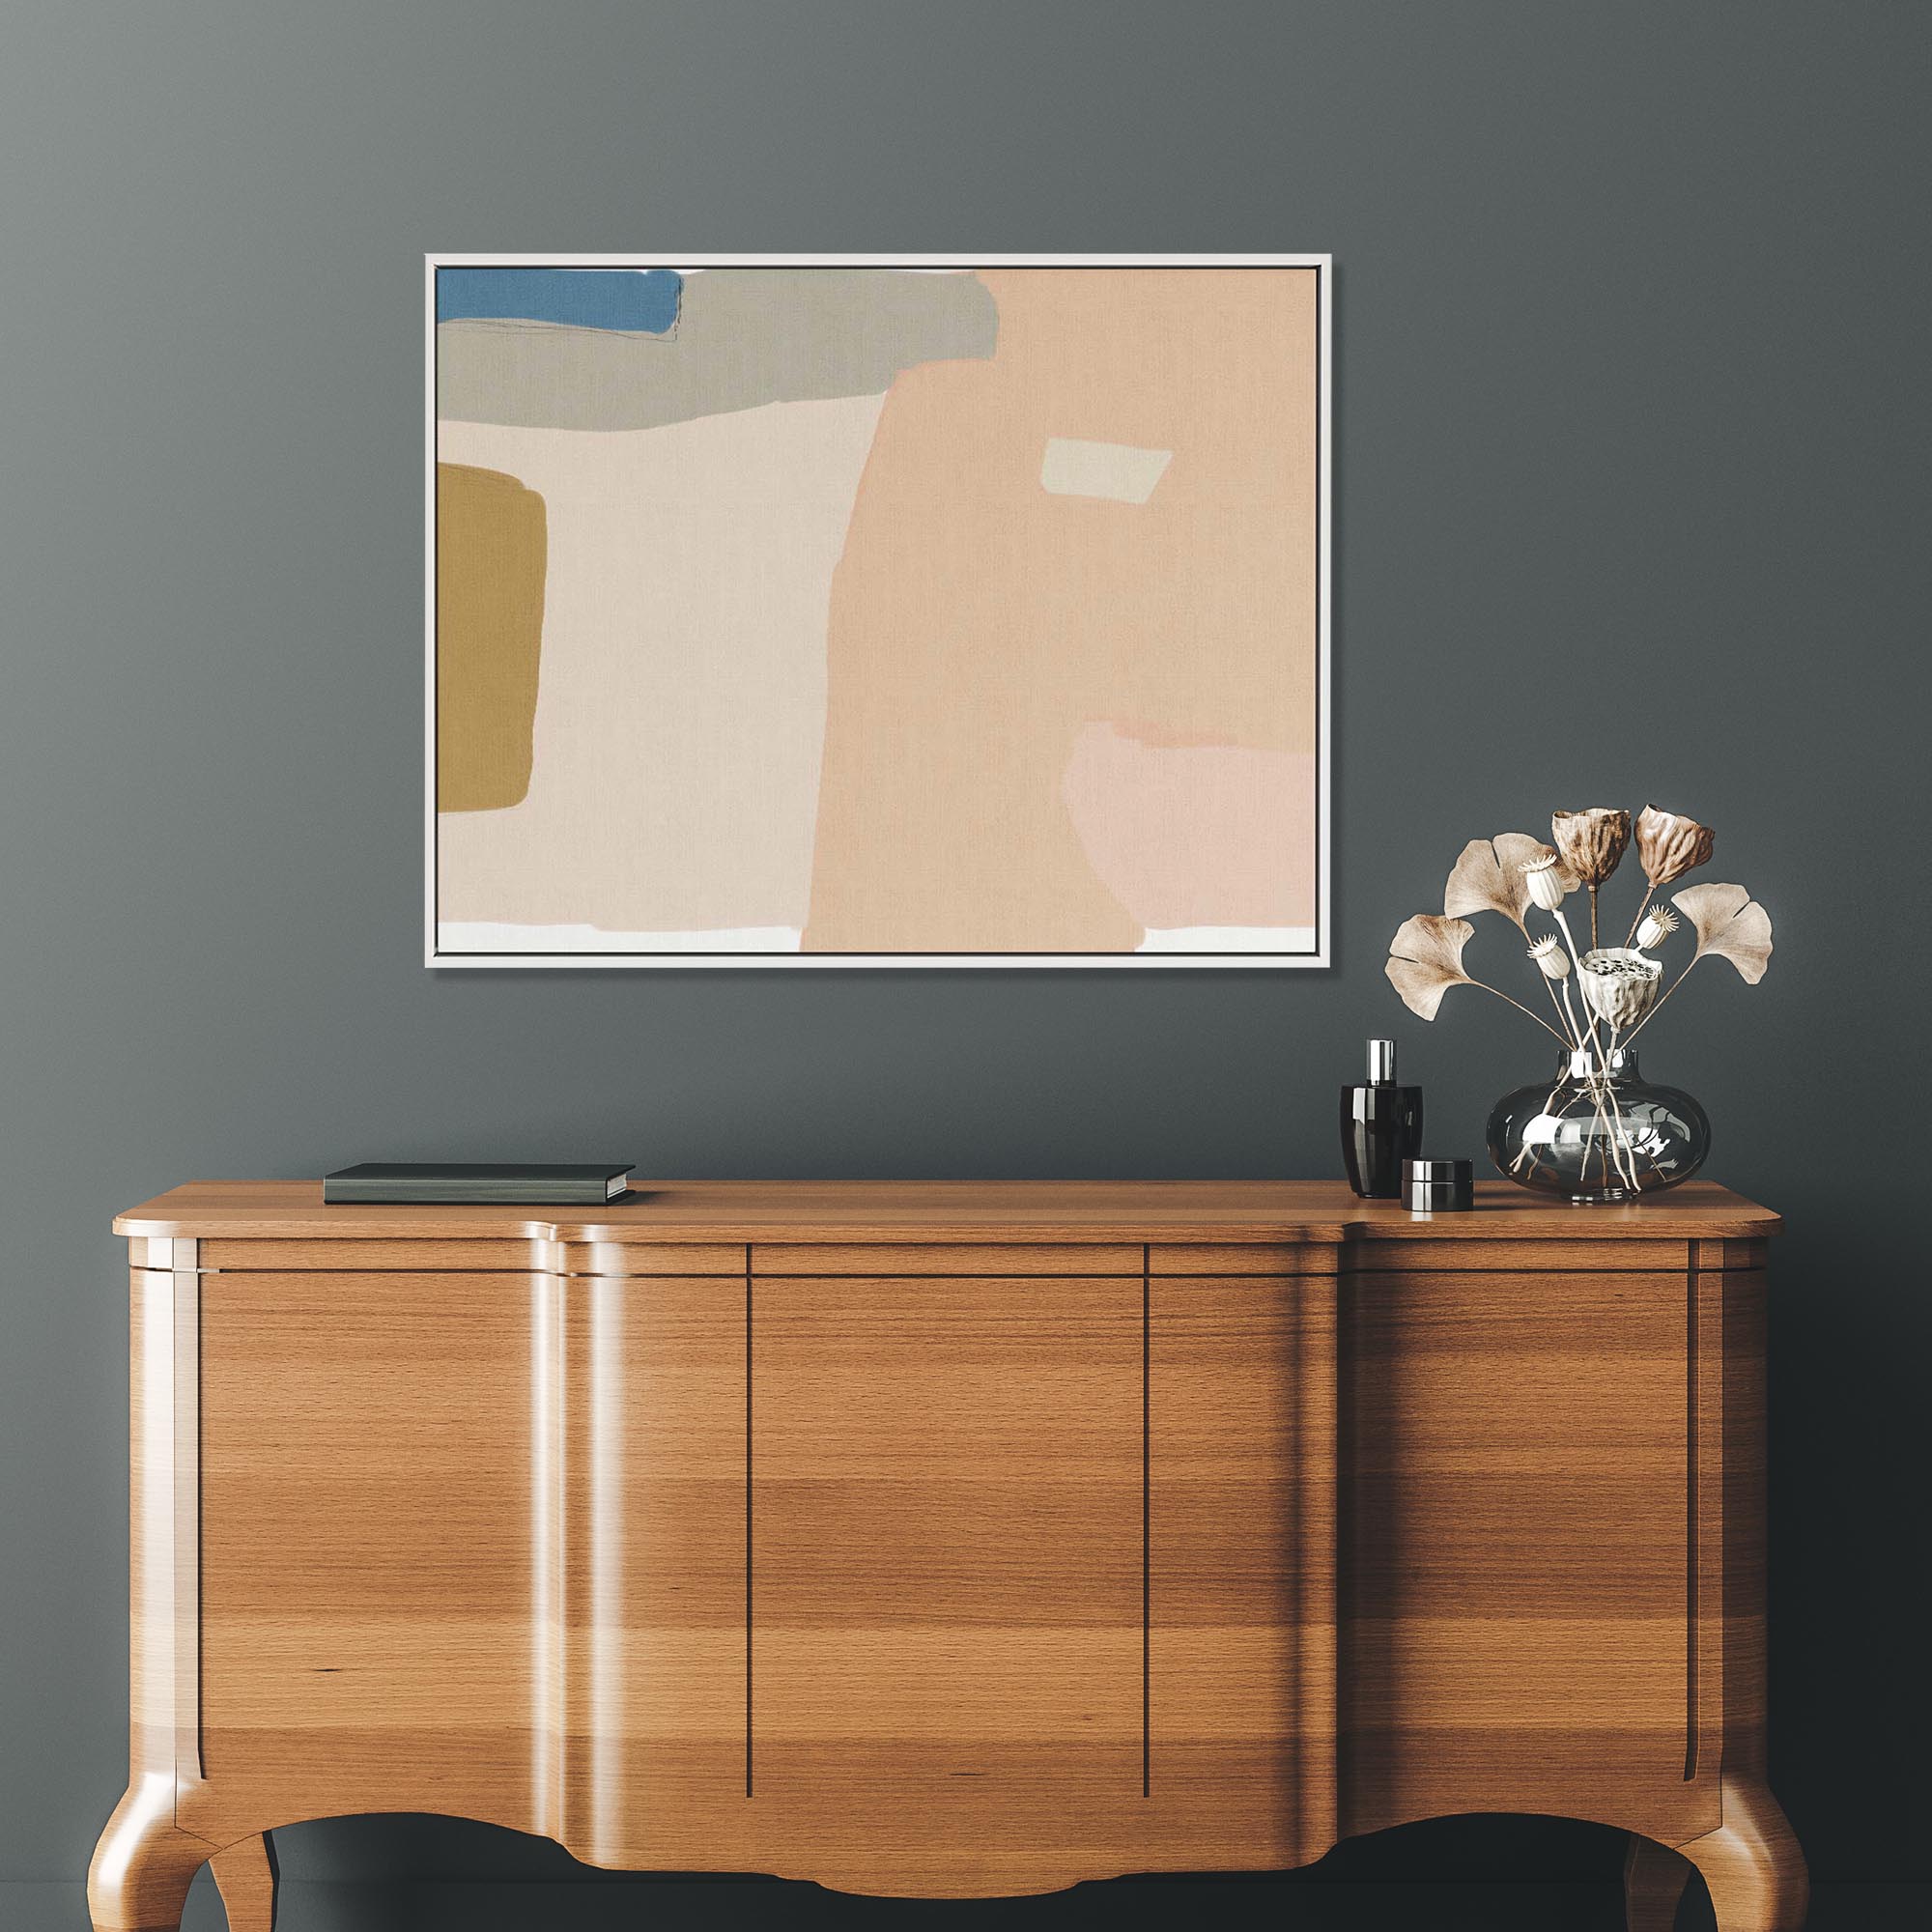 Minimal Abstract Shapes Canvas Print-Abstract House